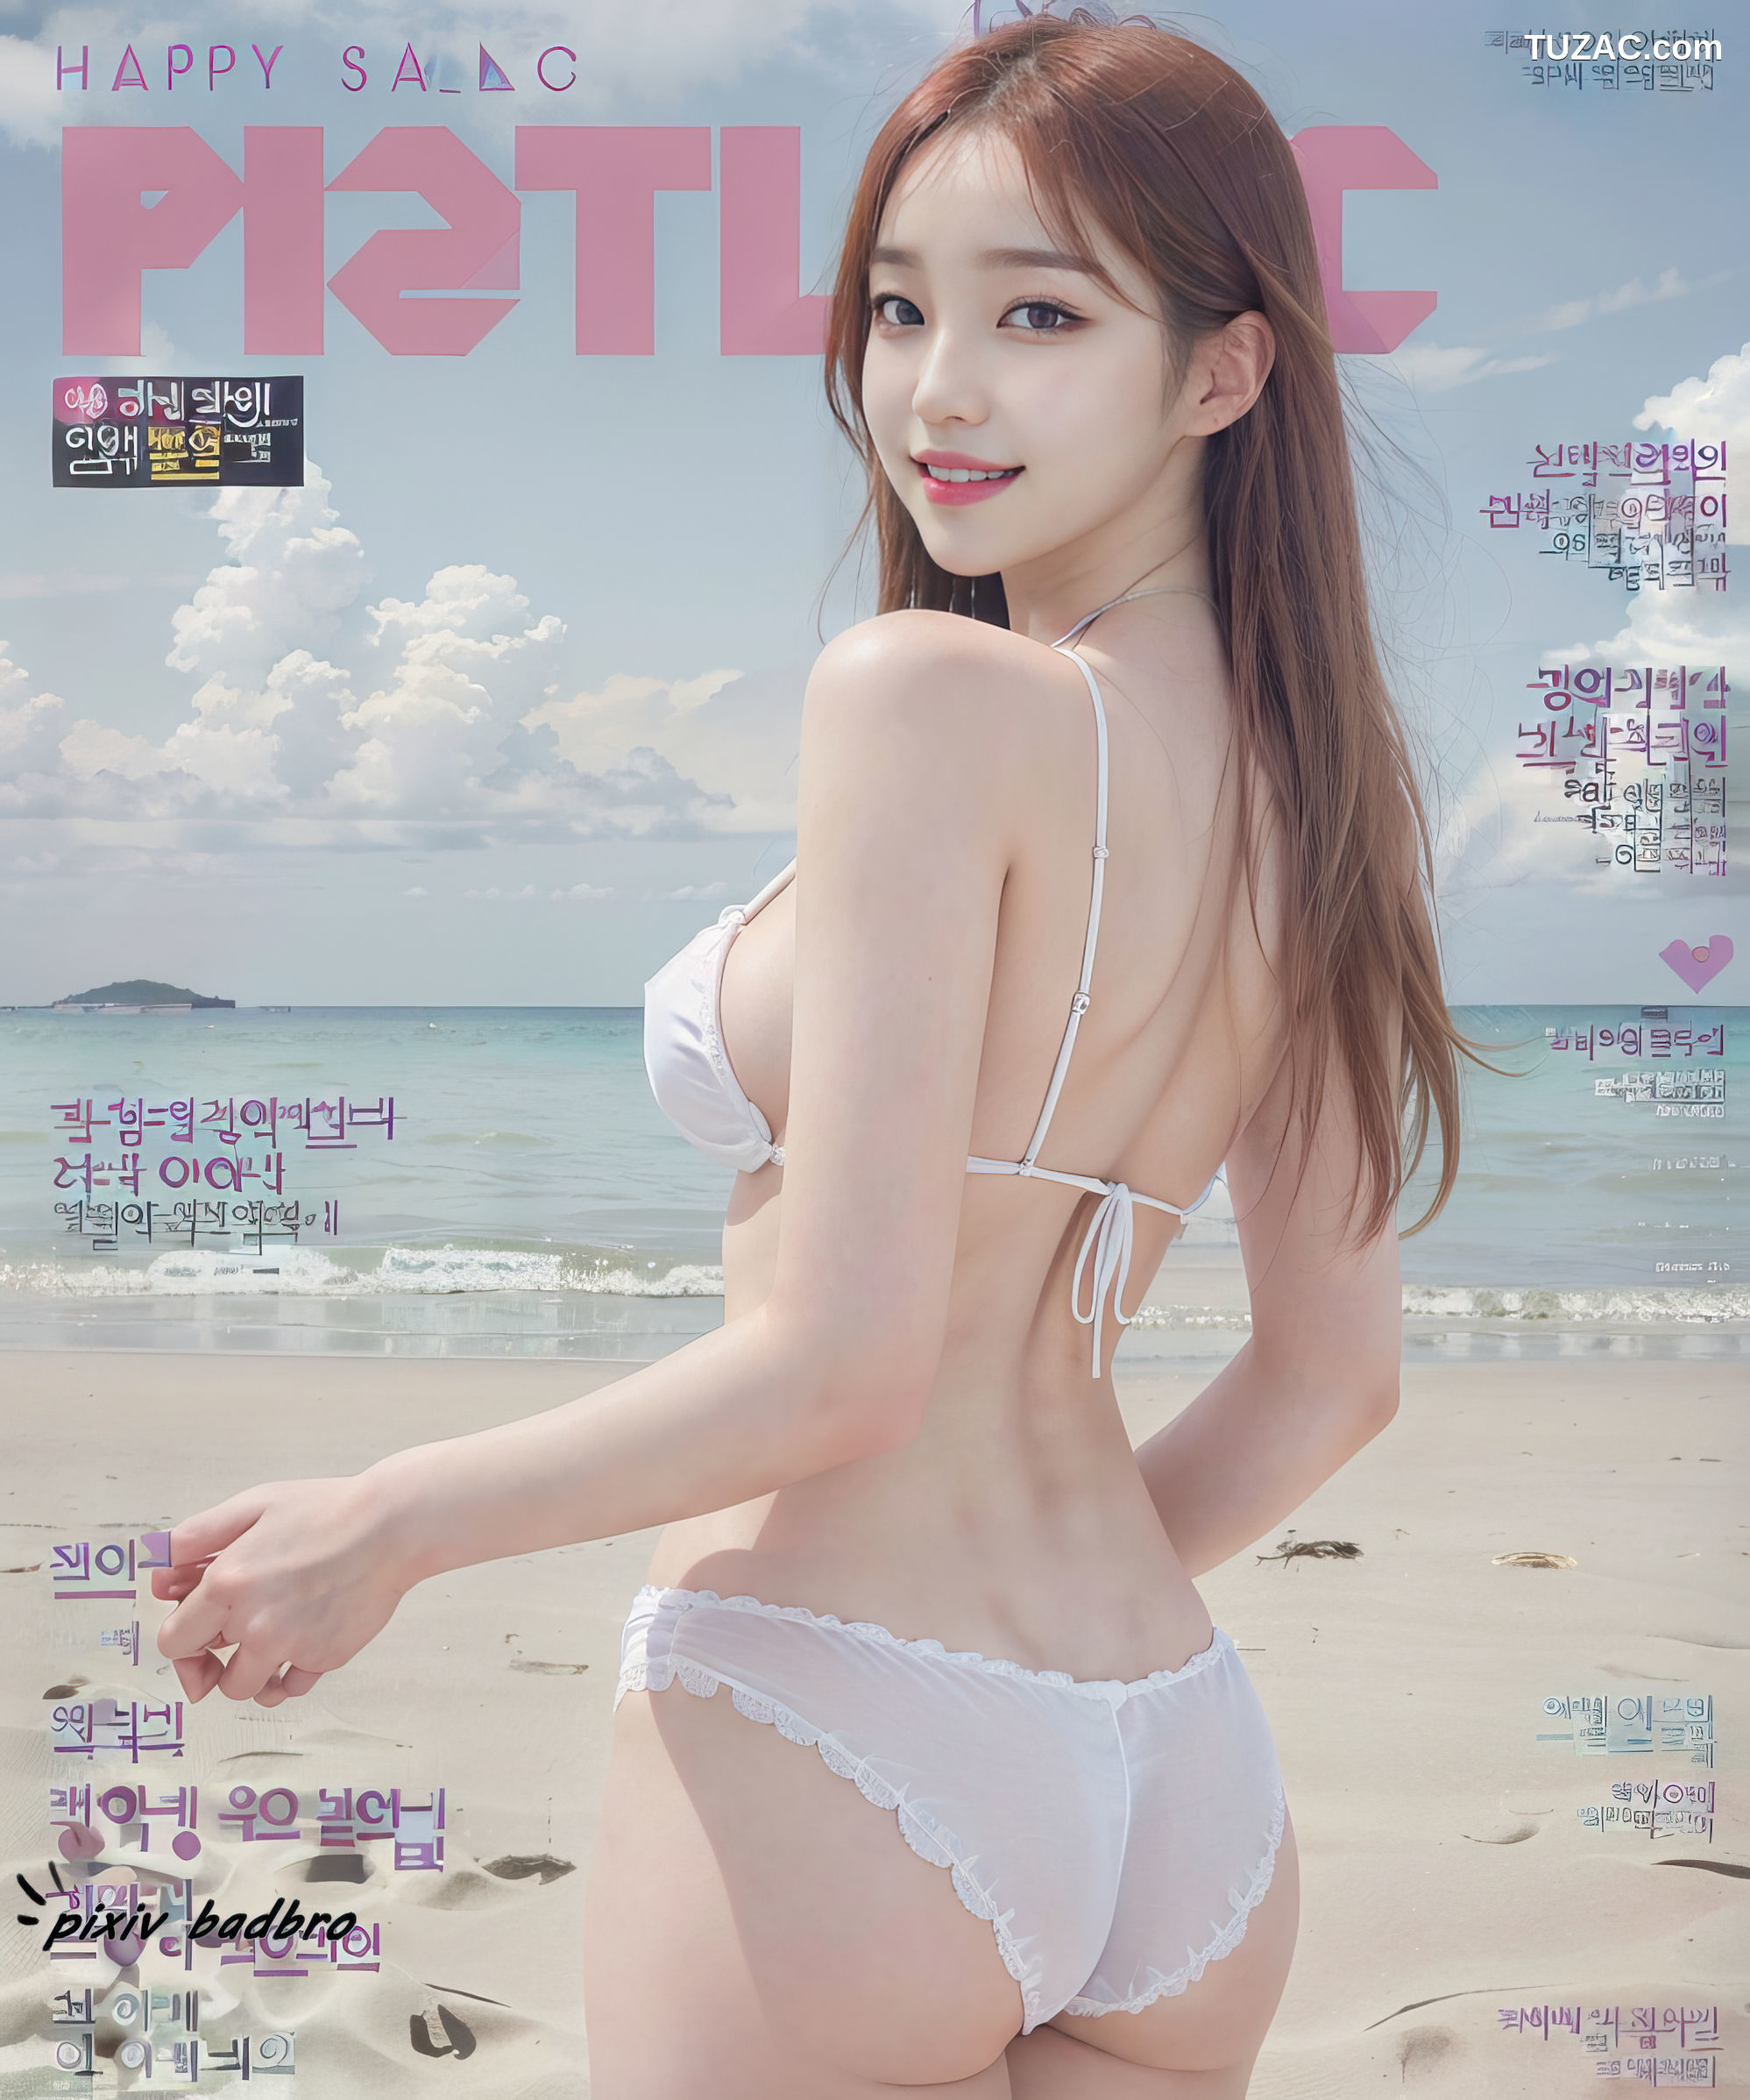 AI美女-杂志封面-海边比基尼-bikini-magazine1-BadBro